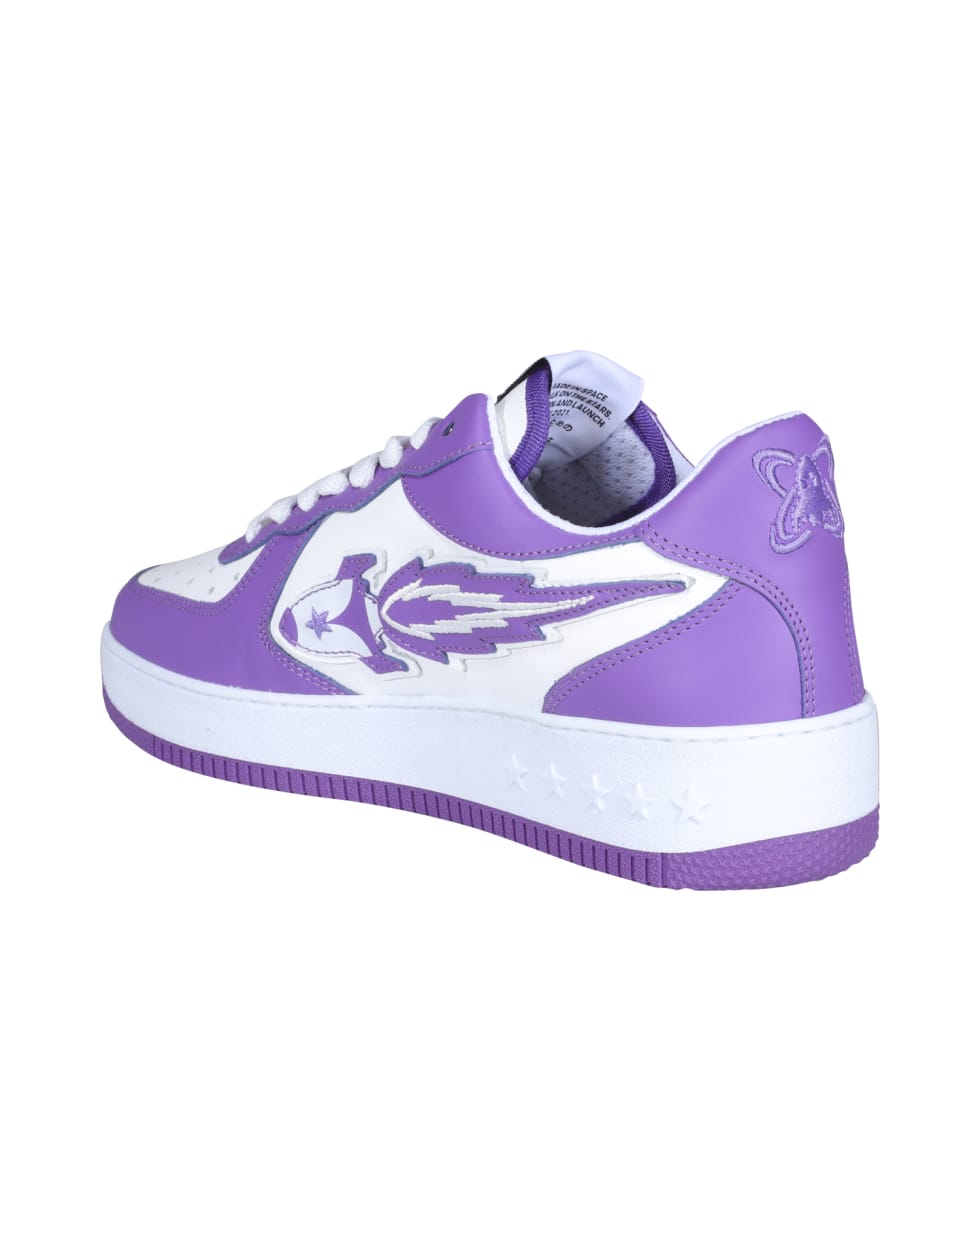 Enterprise Japan 3d Low Sneakers - Purple